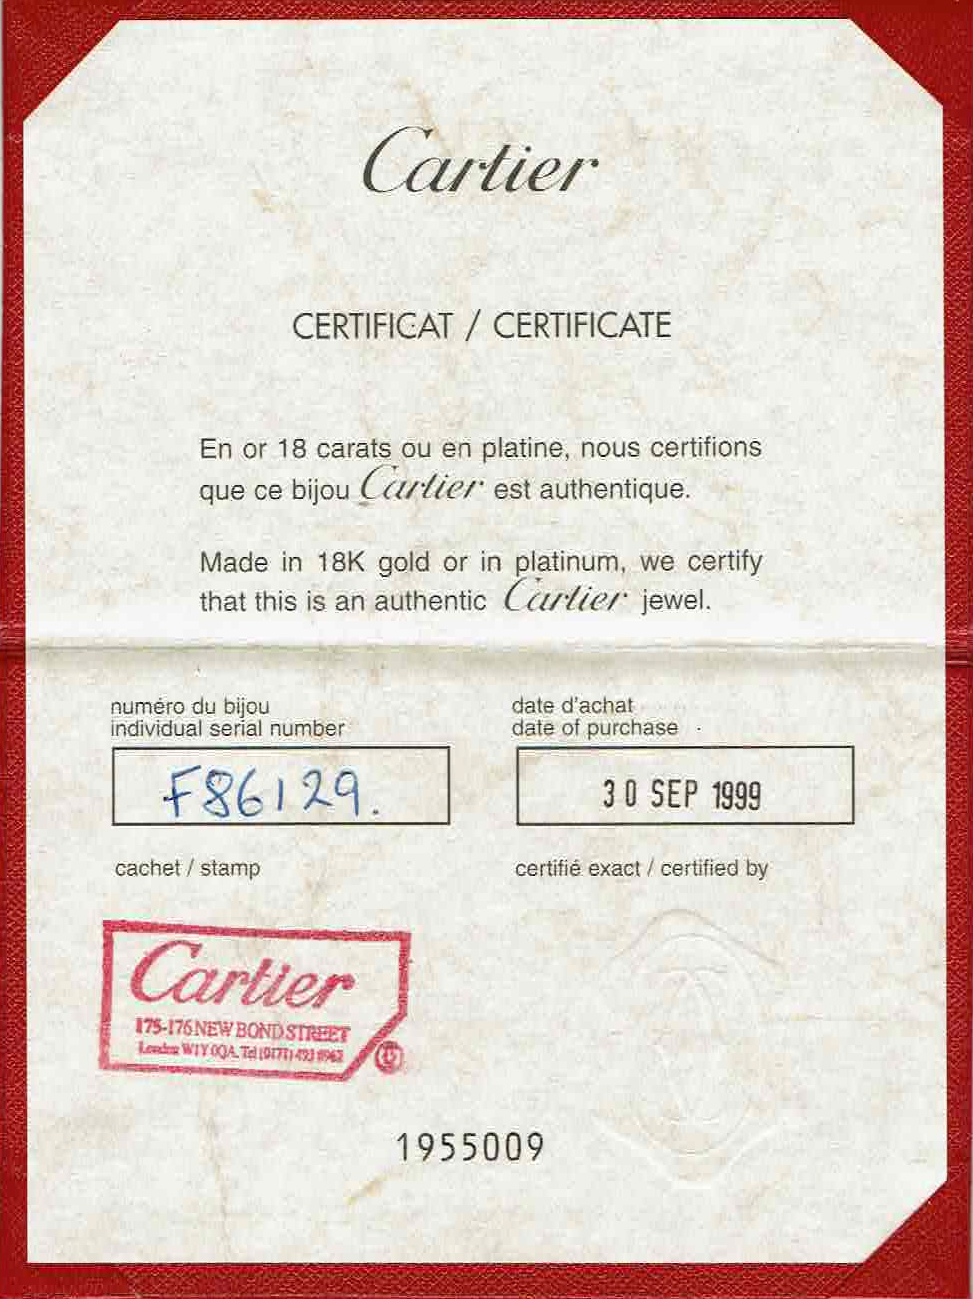 S2857-Cartier-CERT